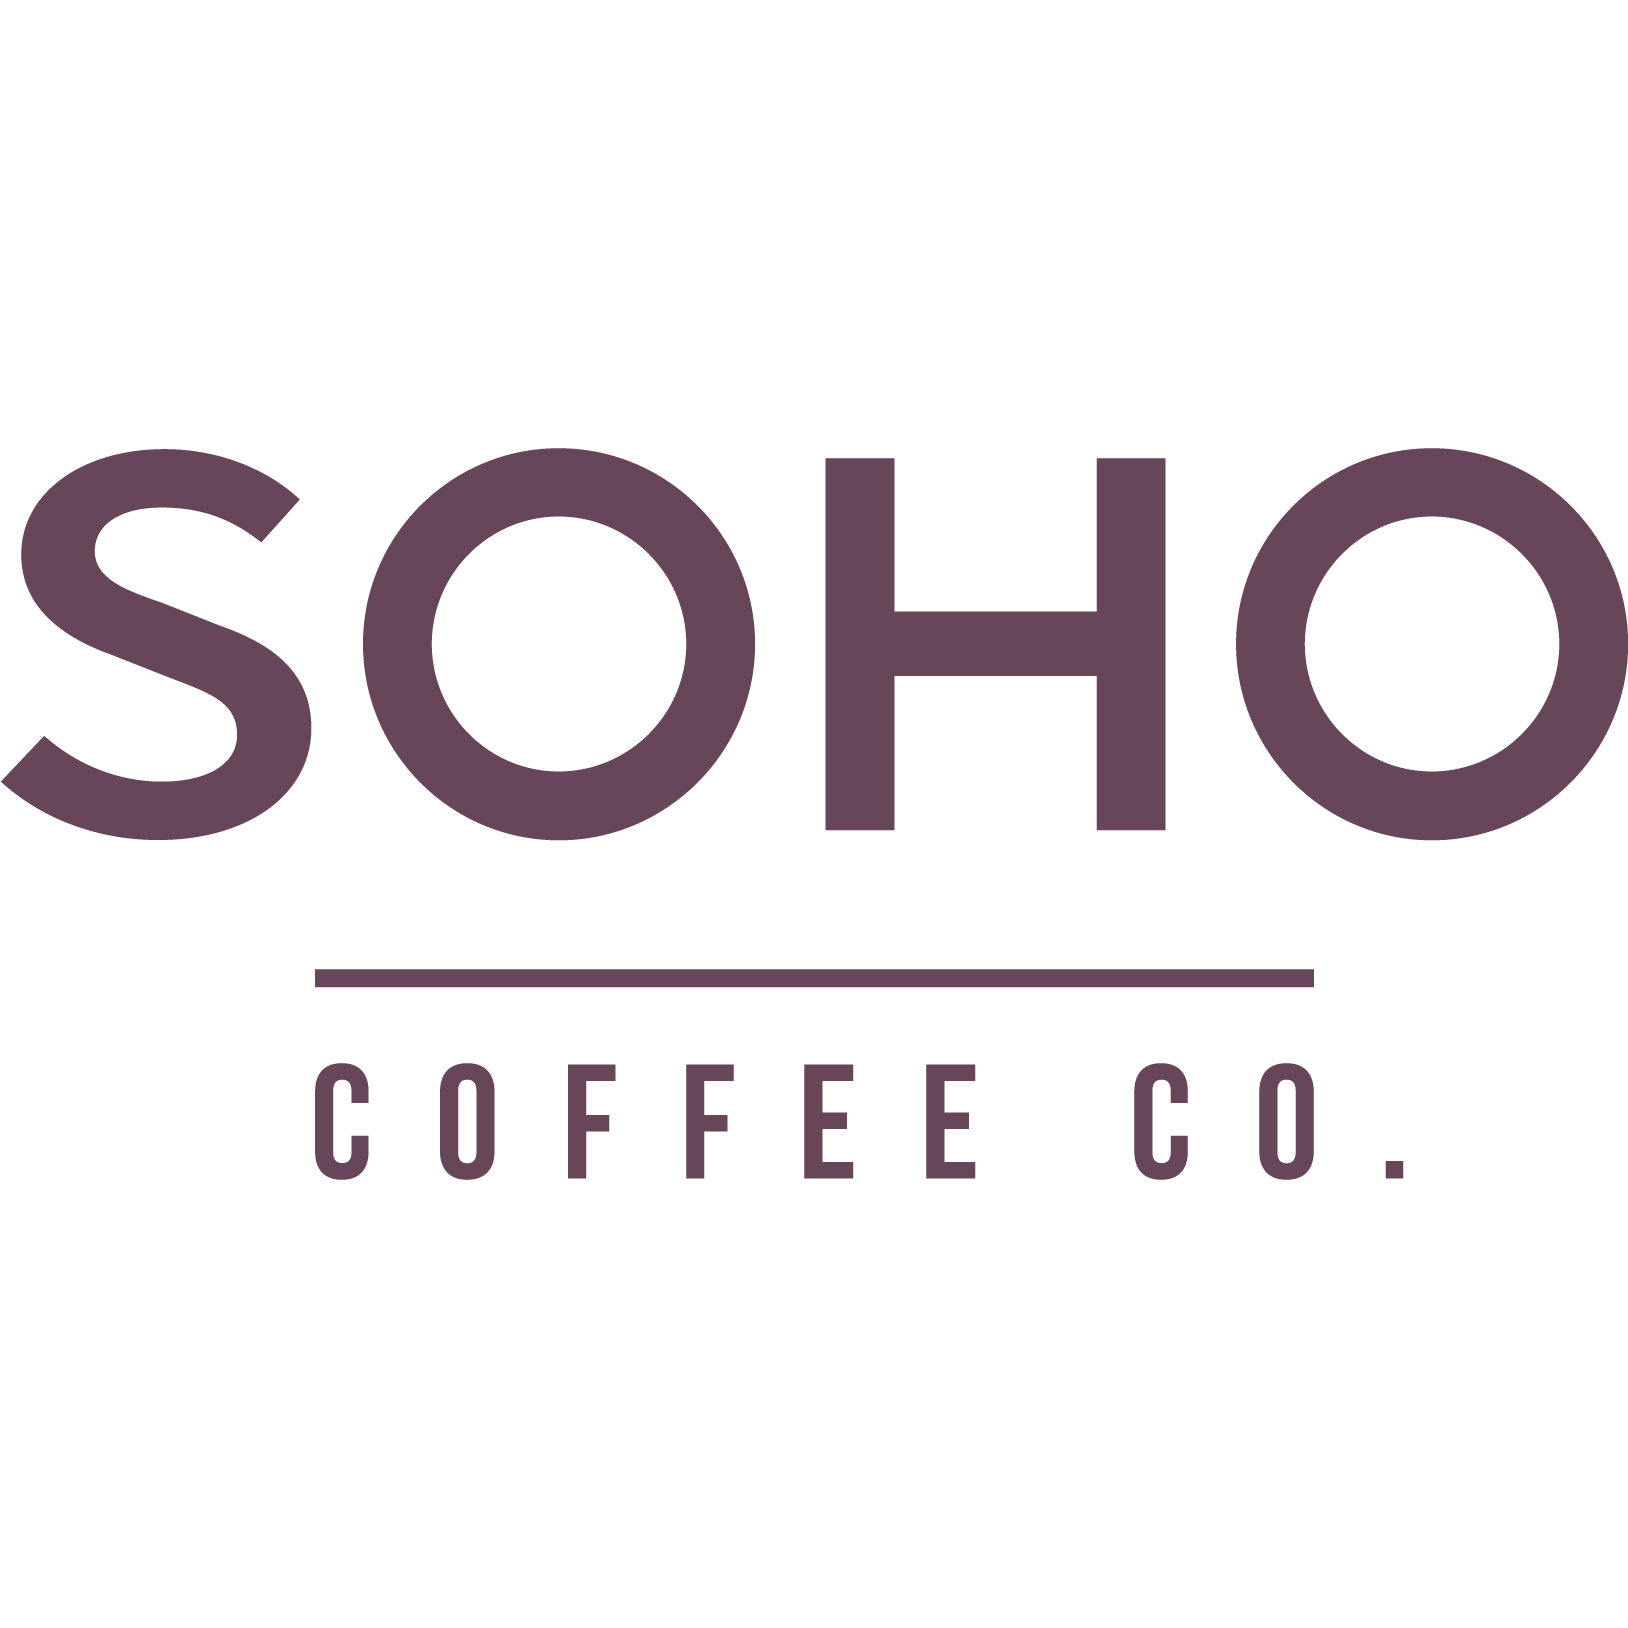 SOHO Coffee - Bristol, Bristol BS34 5UR - 01179 508446 | ShowMeLocal.com